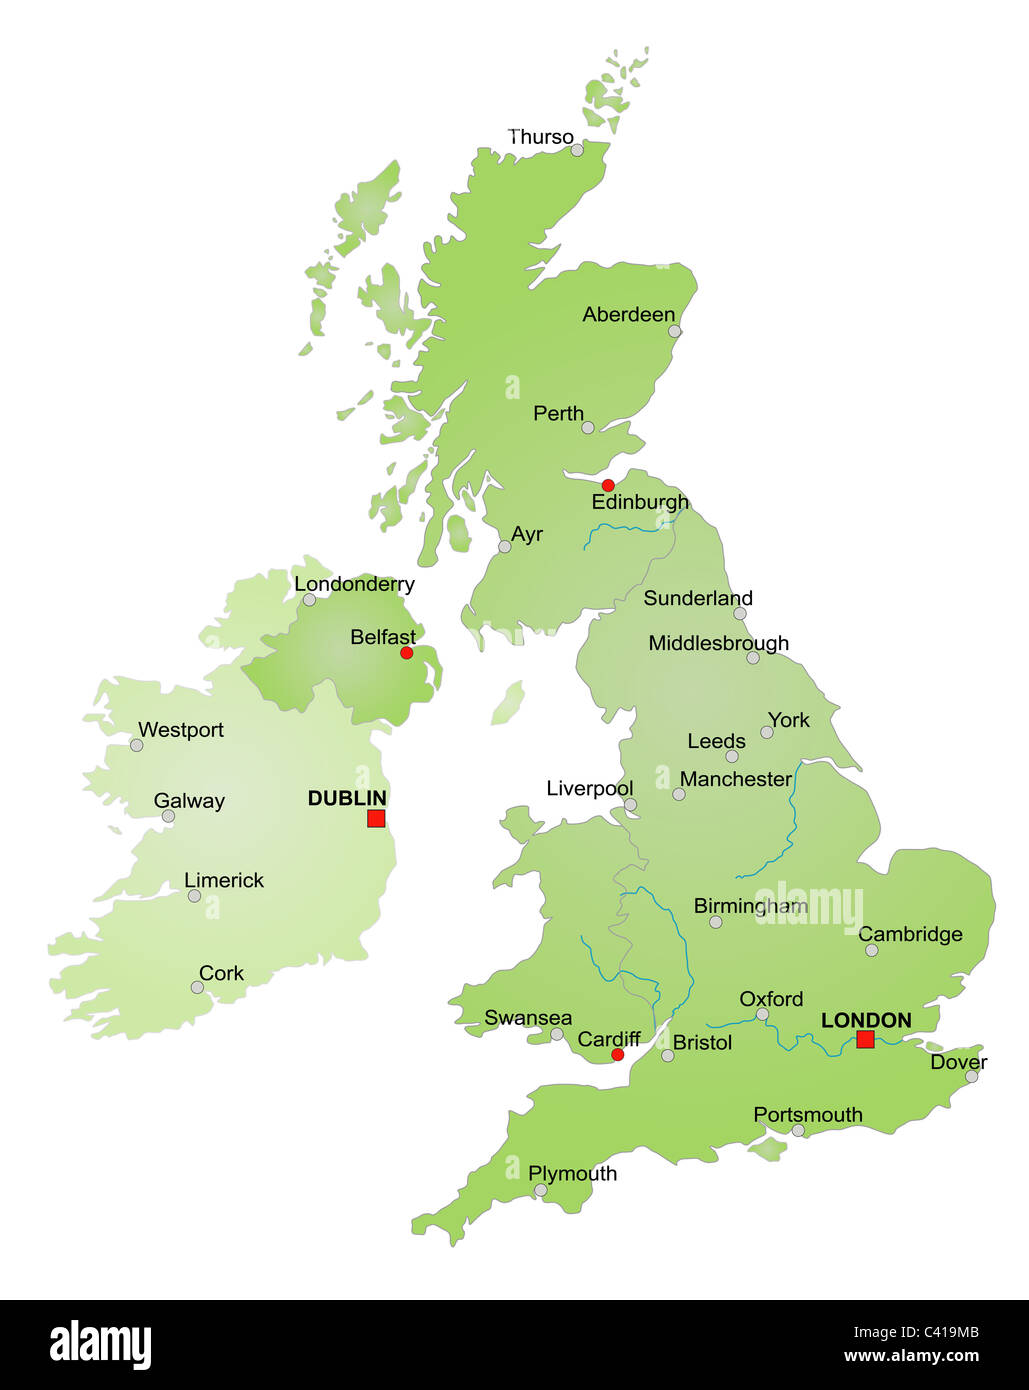 Stylized map of the United Kingdom showing England, Wales, Scotland, Northern Ireland and Ireland. All on white background. Stock Photo